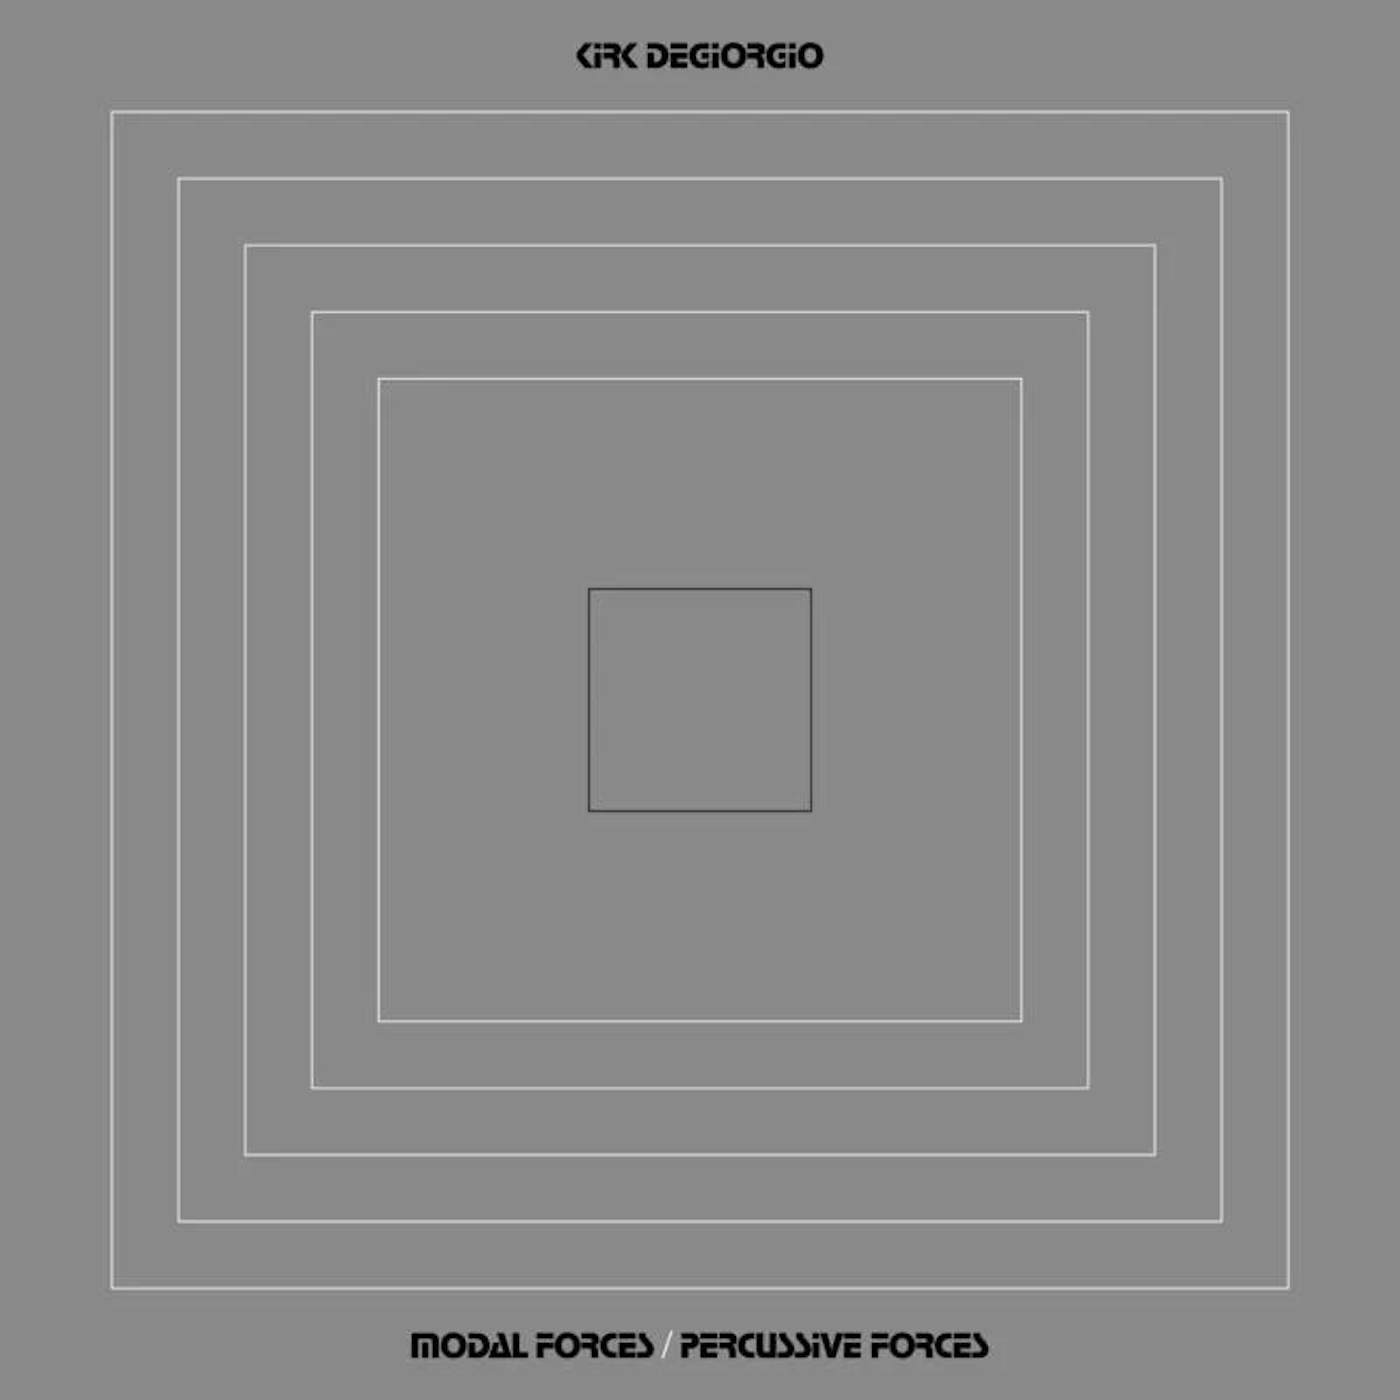 Kirk Degiorgio LP - Modal Forces / Percussive Forc (Vinyl)